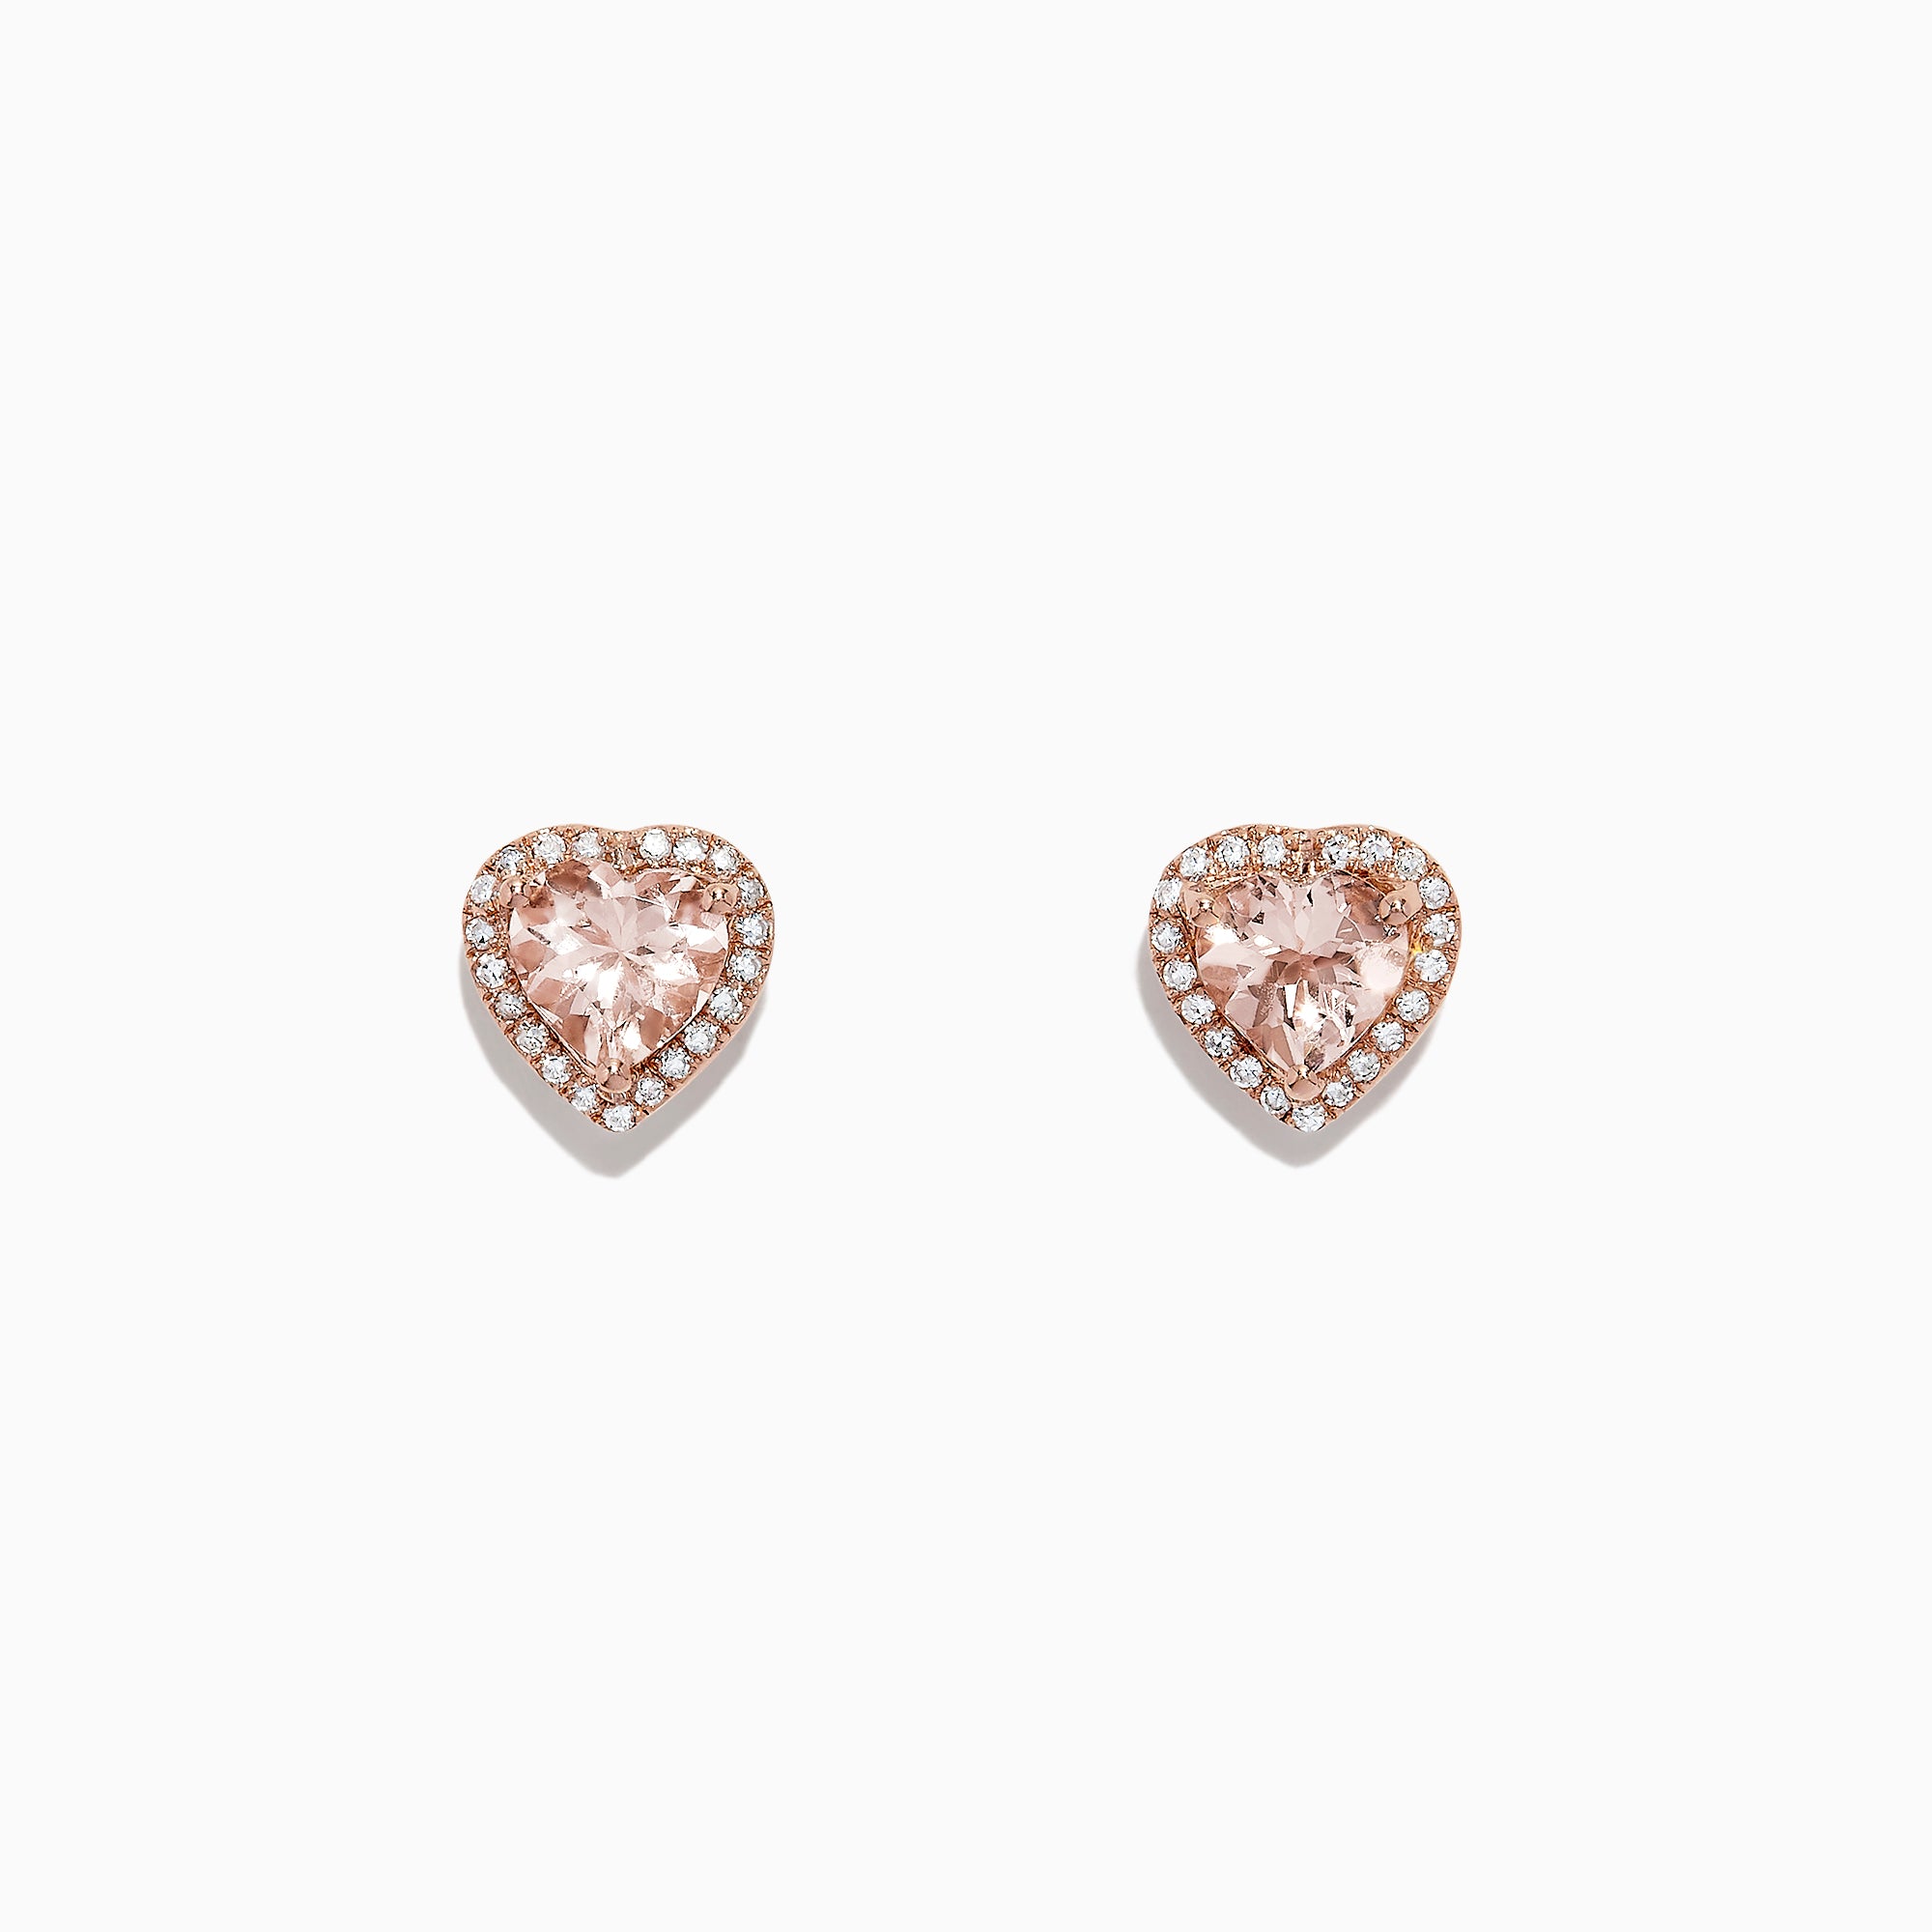 Rose Gold Morganite & Diamond Earrings 14K, .25 Carat, Women's, by Ben Bridge Jewelers